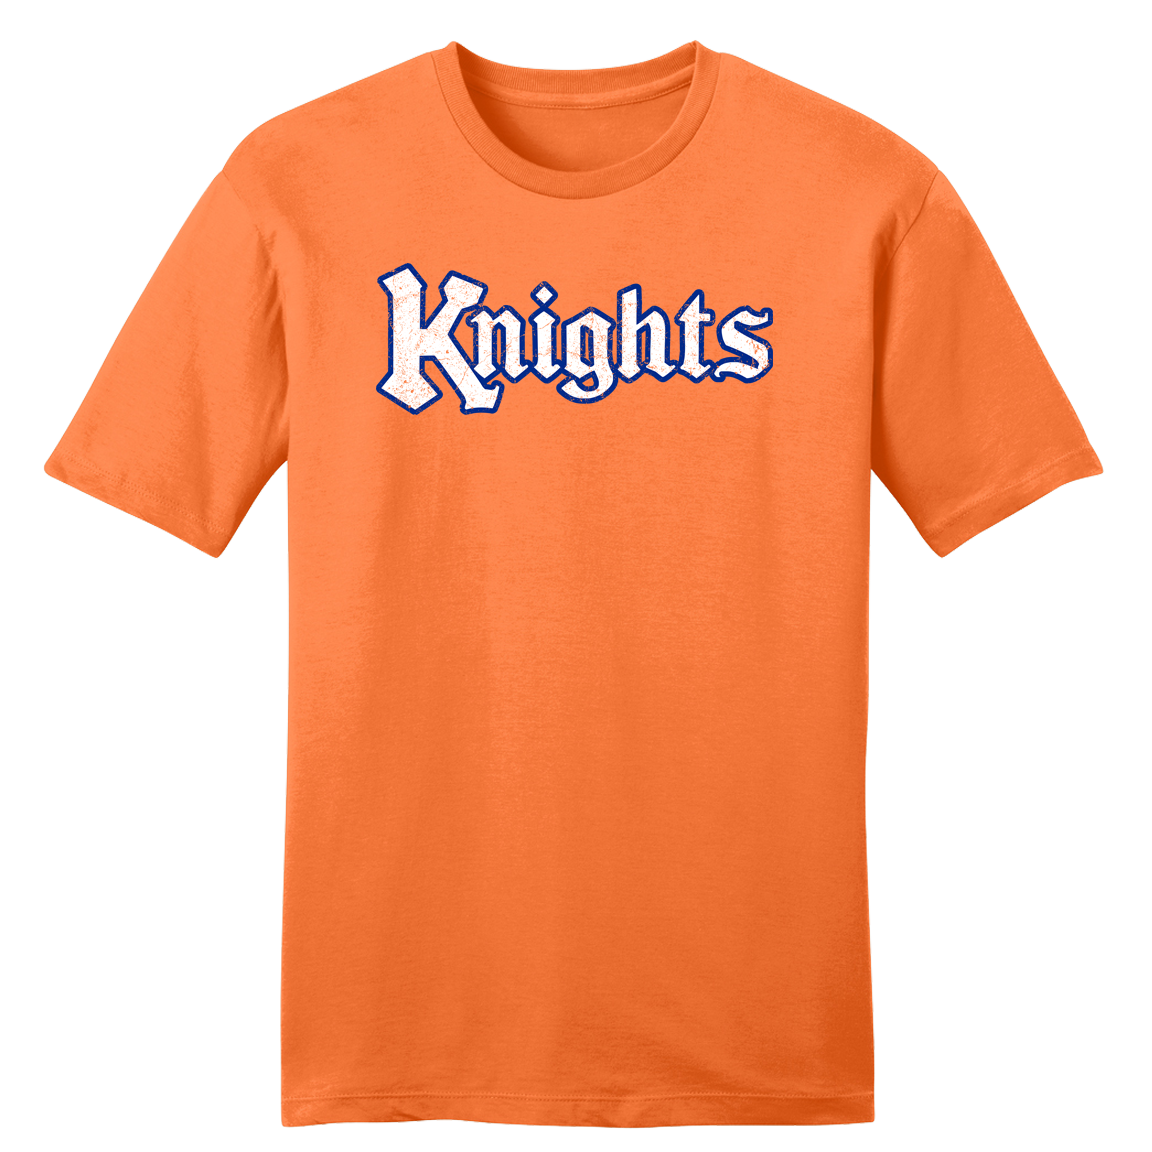 Kentucky Knights Baseball Club - Cincy Shirts